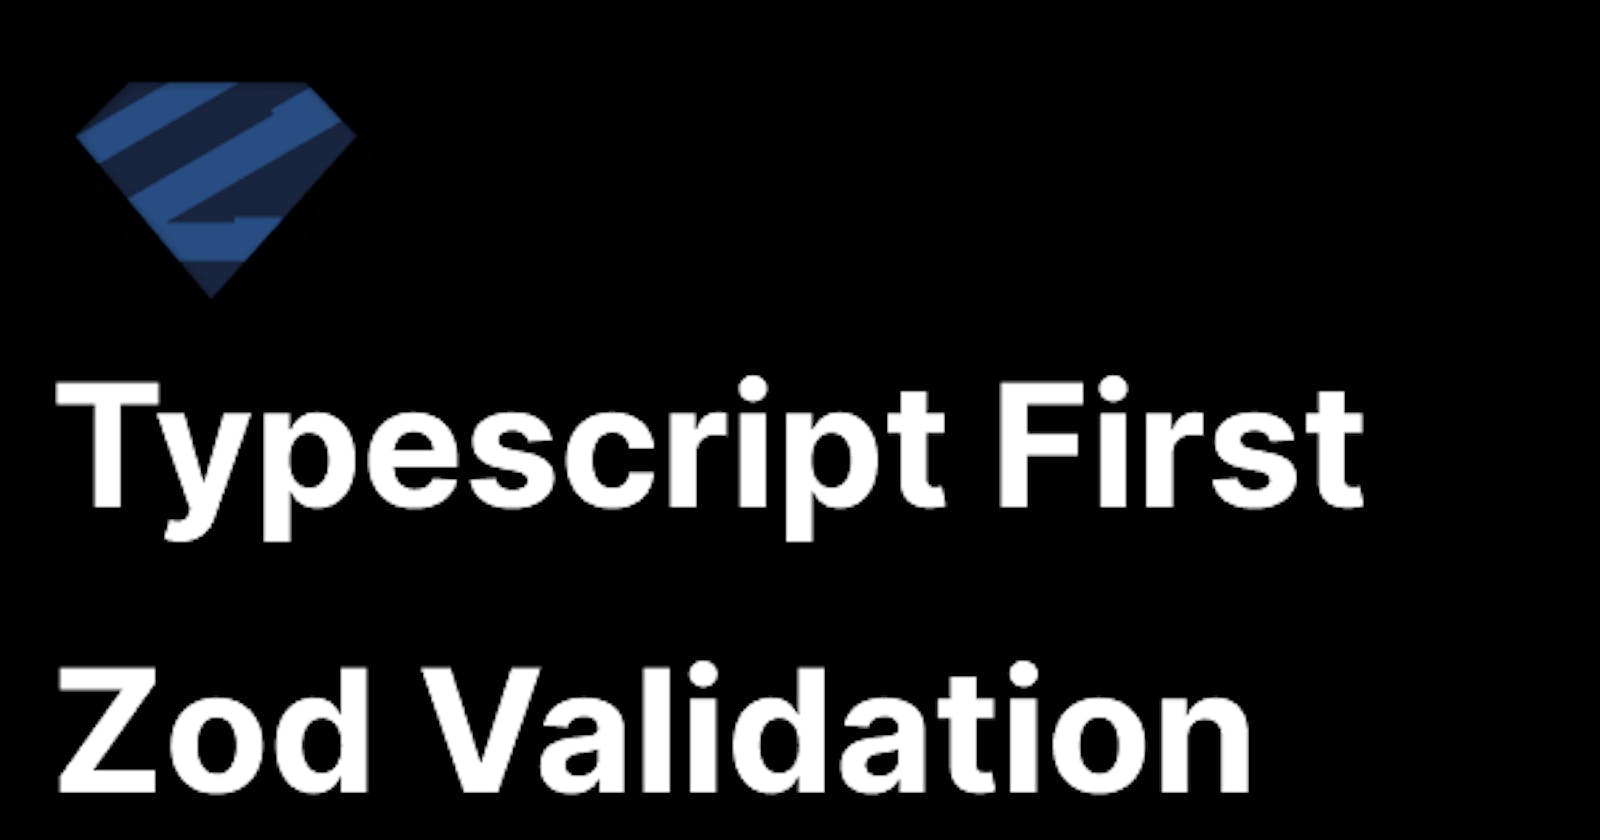 Typescript  first  Zod  validation